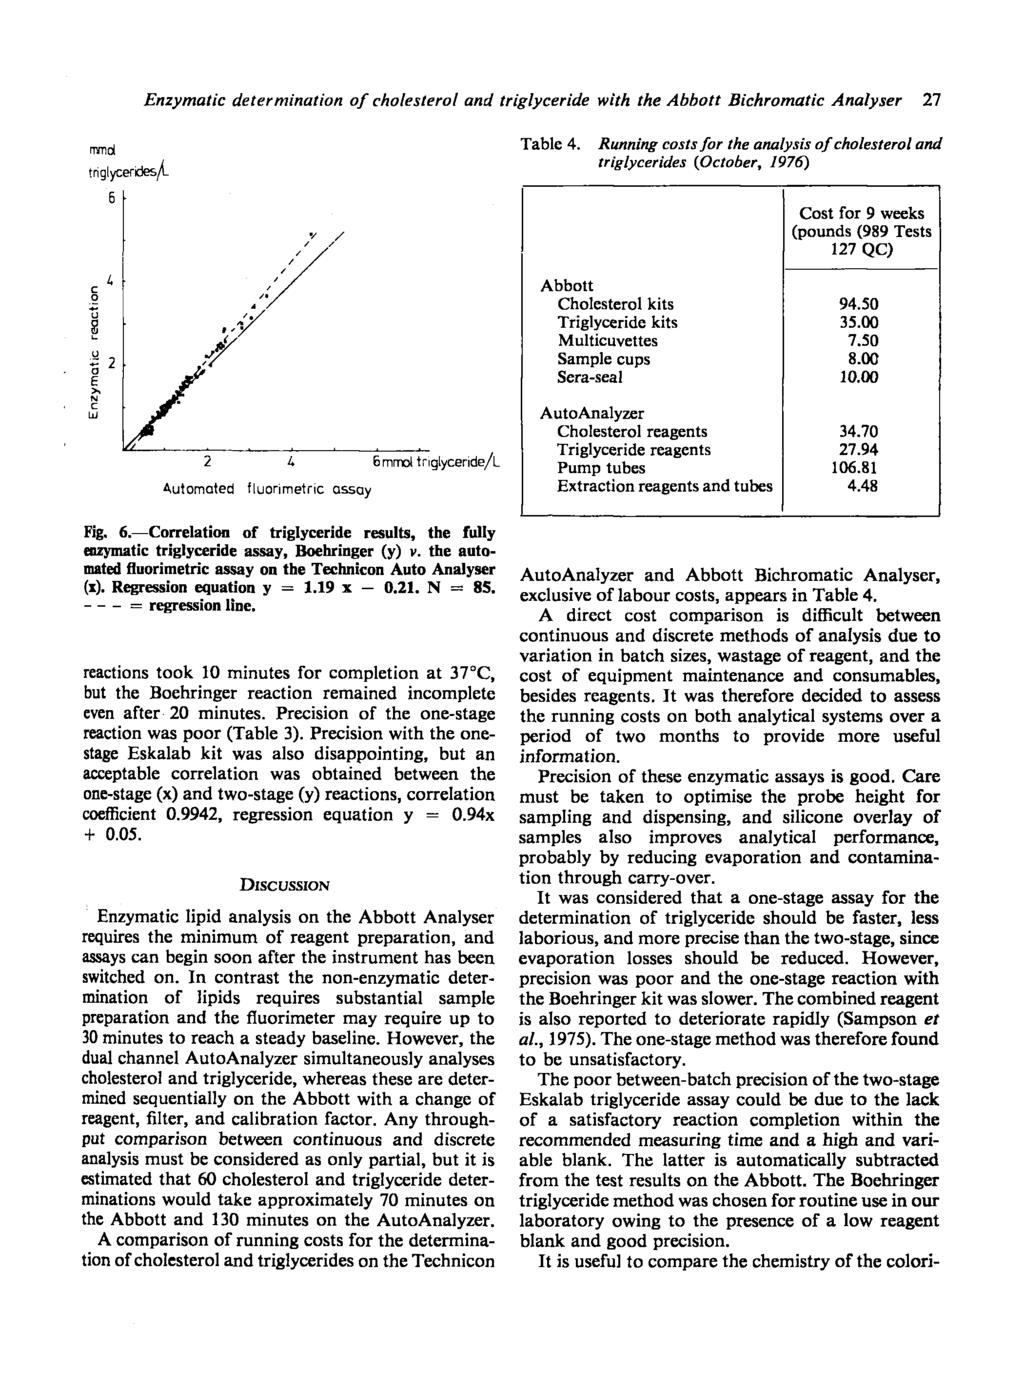 nzymati determination of holesterol and triglyeride with the Abbott Bihromati Analyser 27 rrmd triglyeerides.a- 6 Table 4.